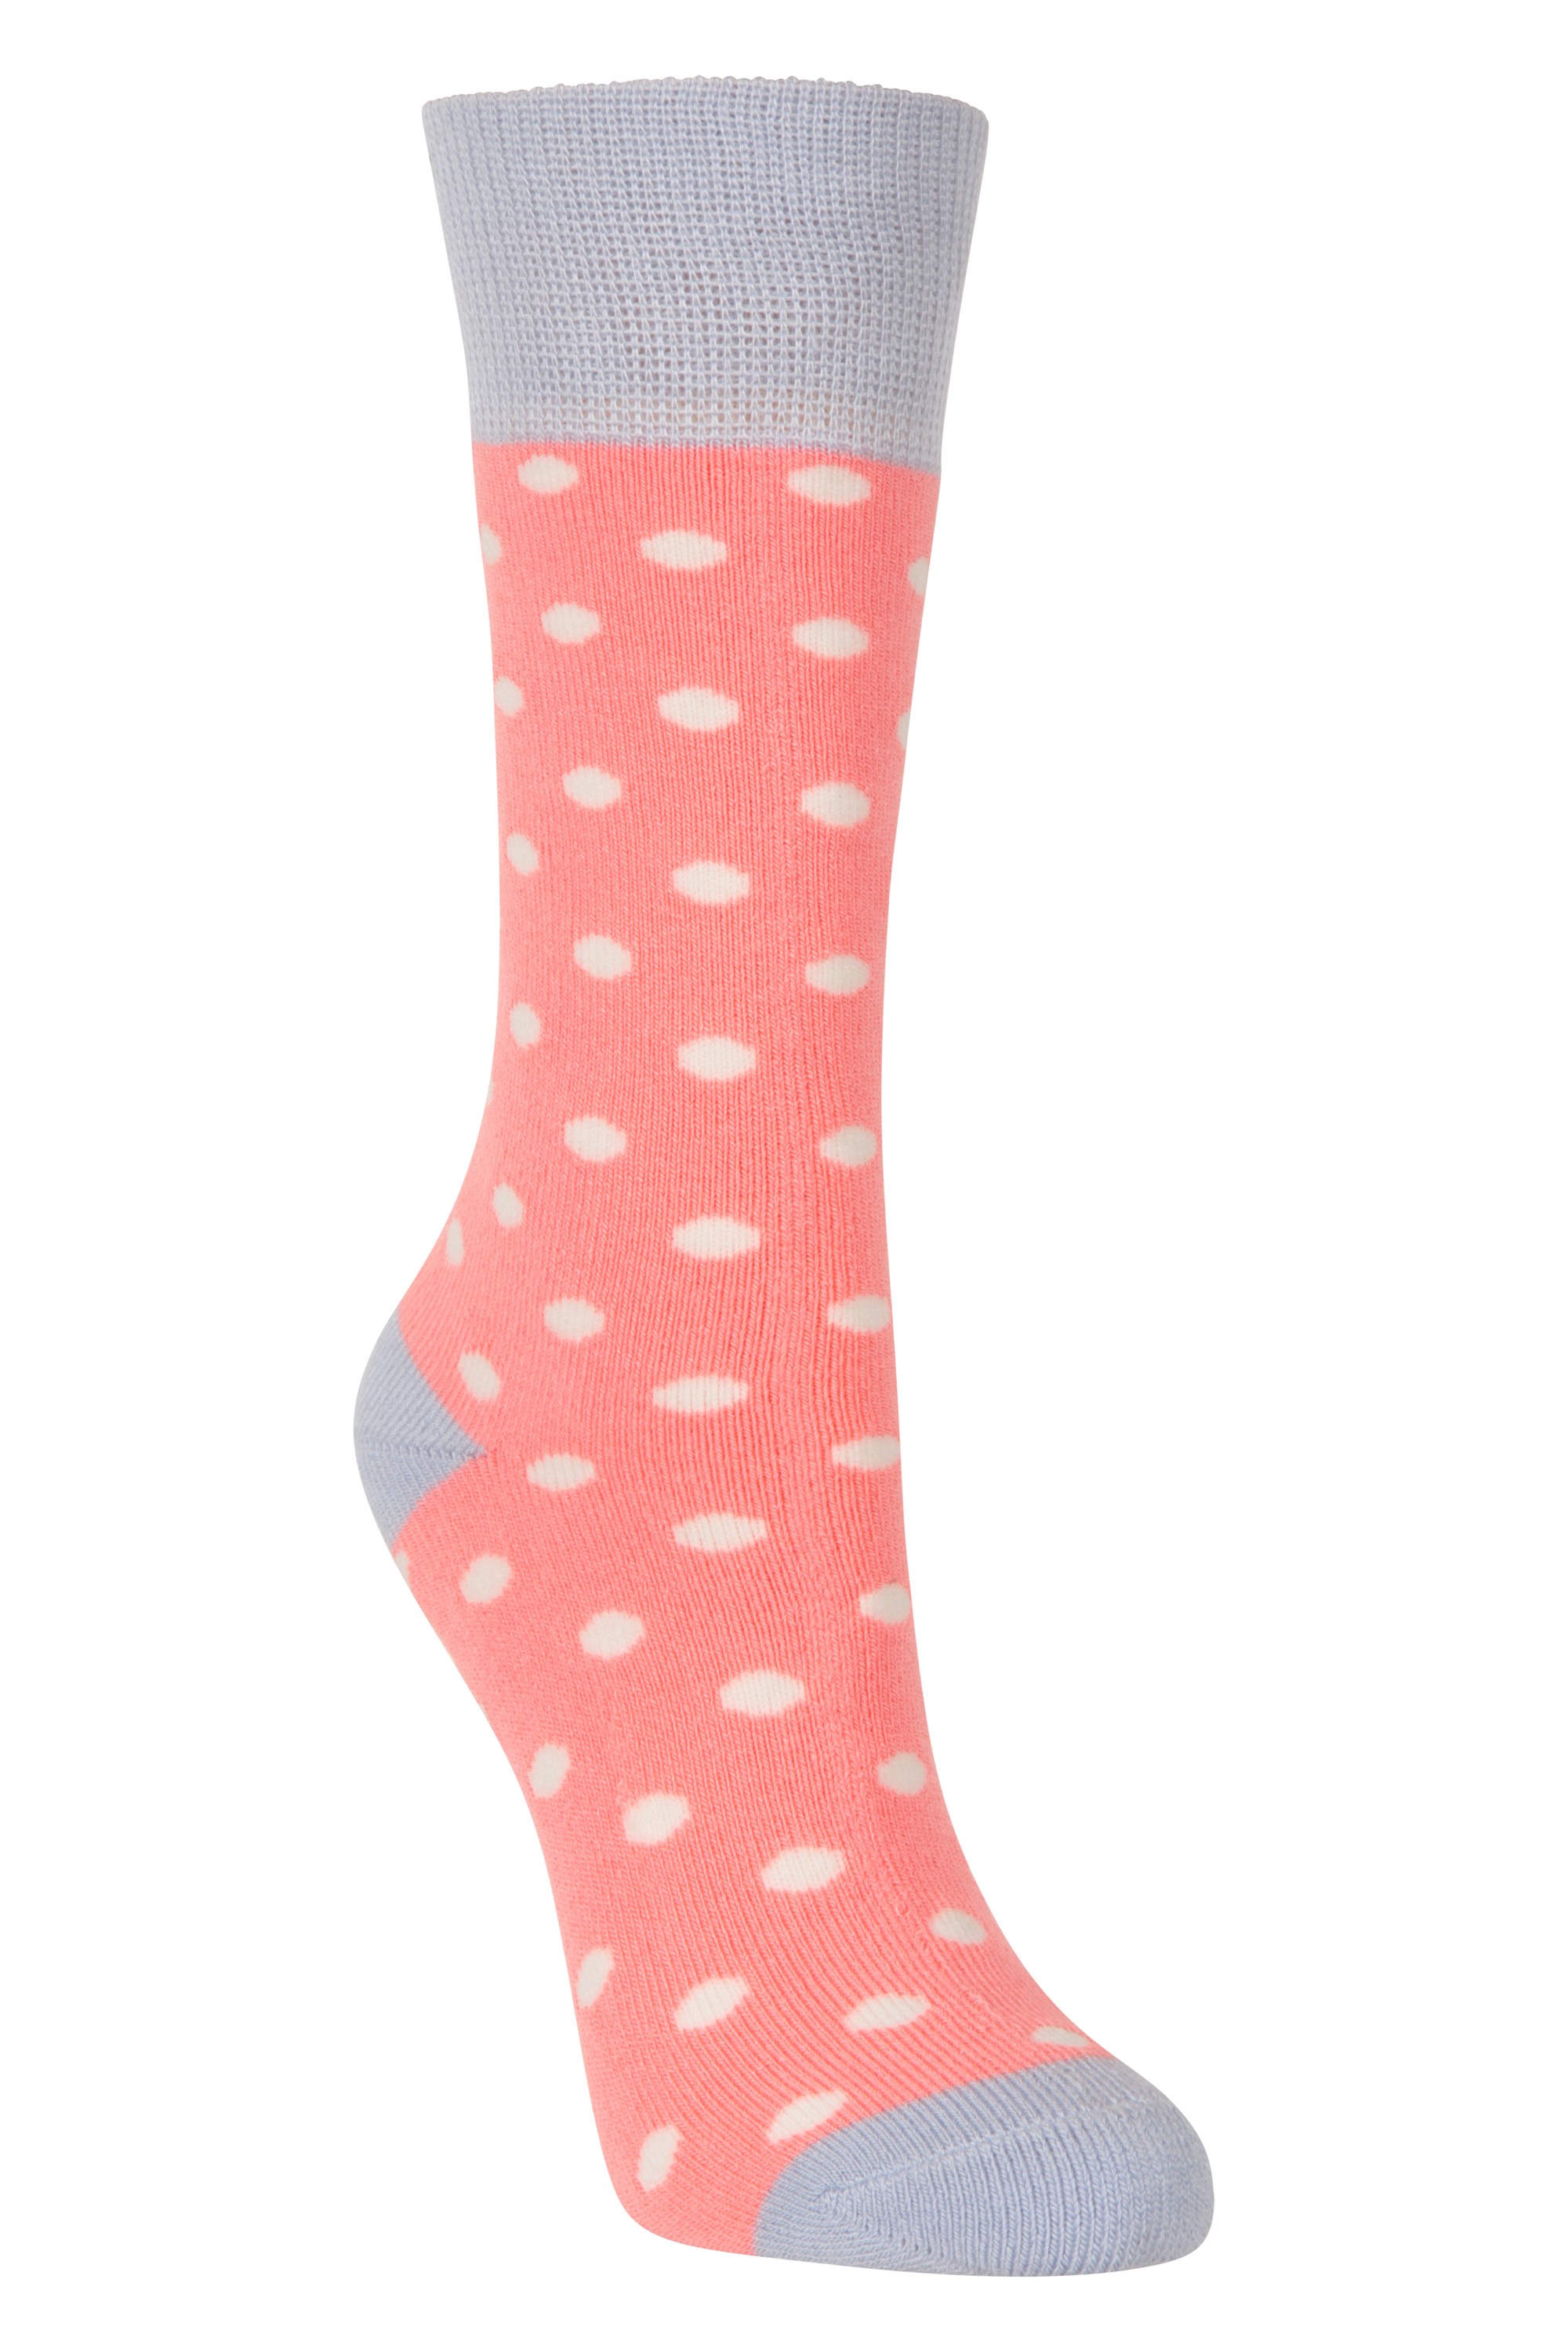 Kids Knee Length Welly Socks - Pink